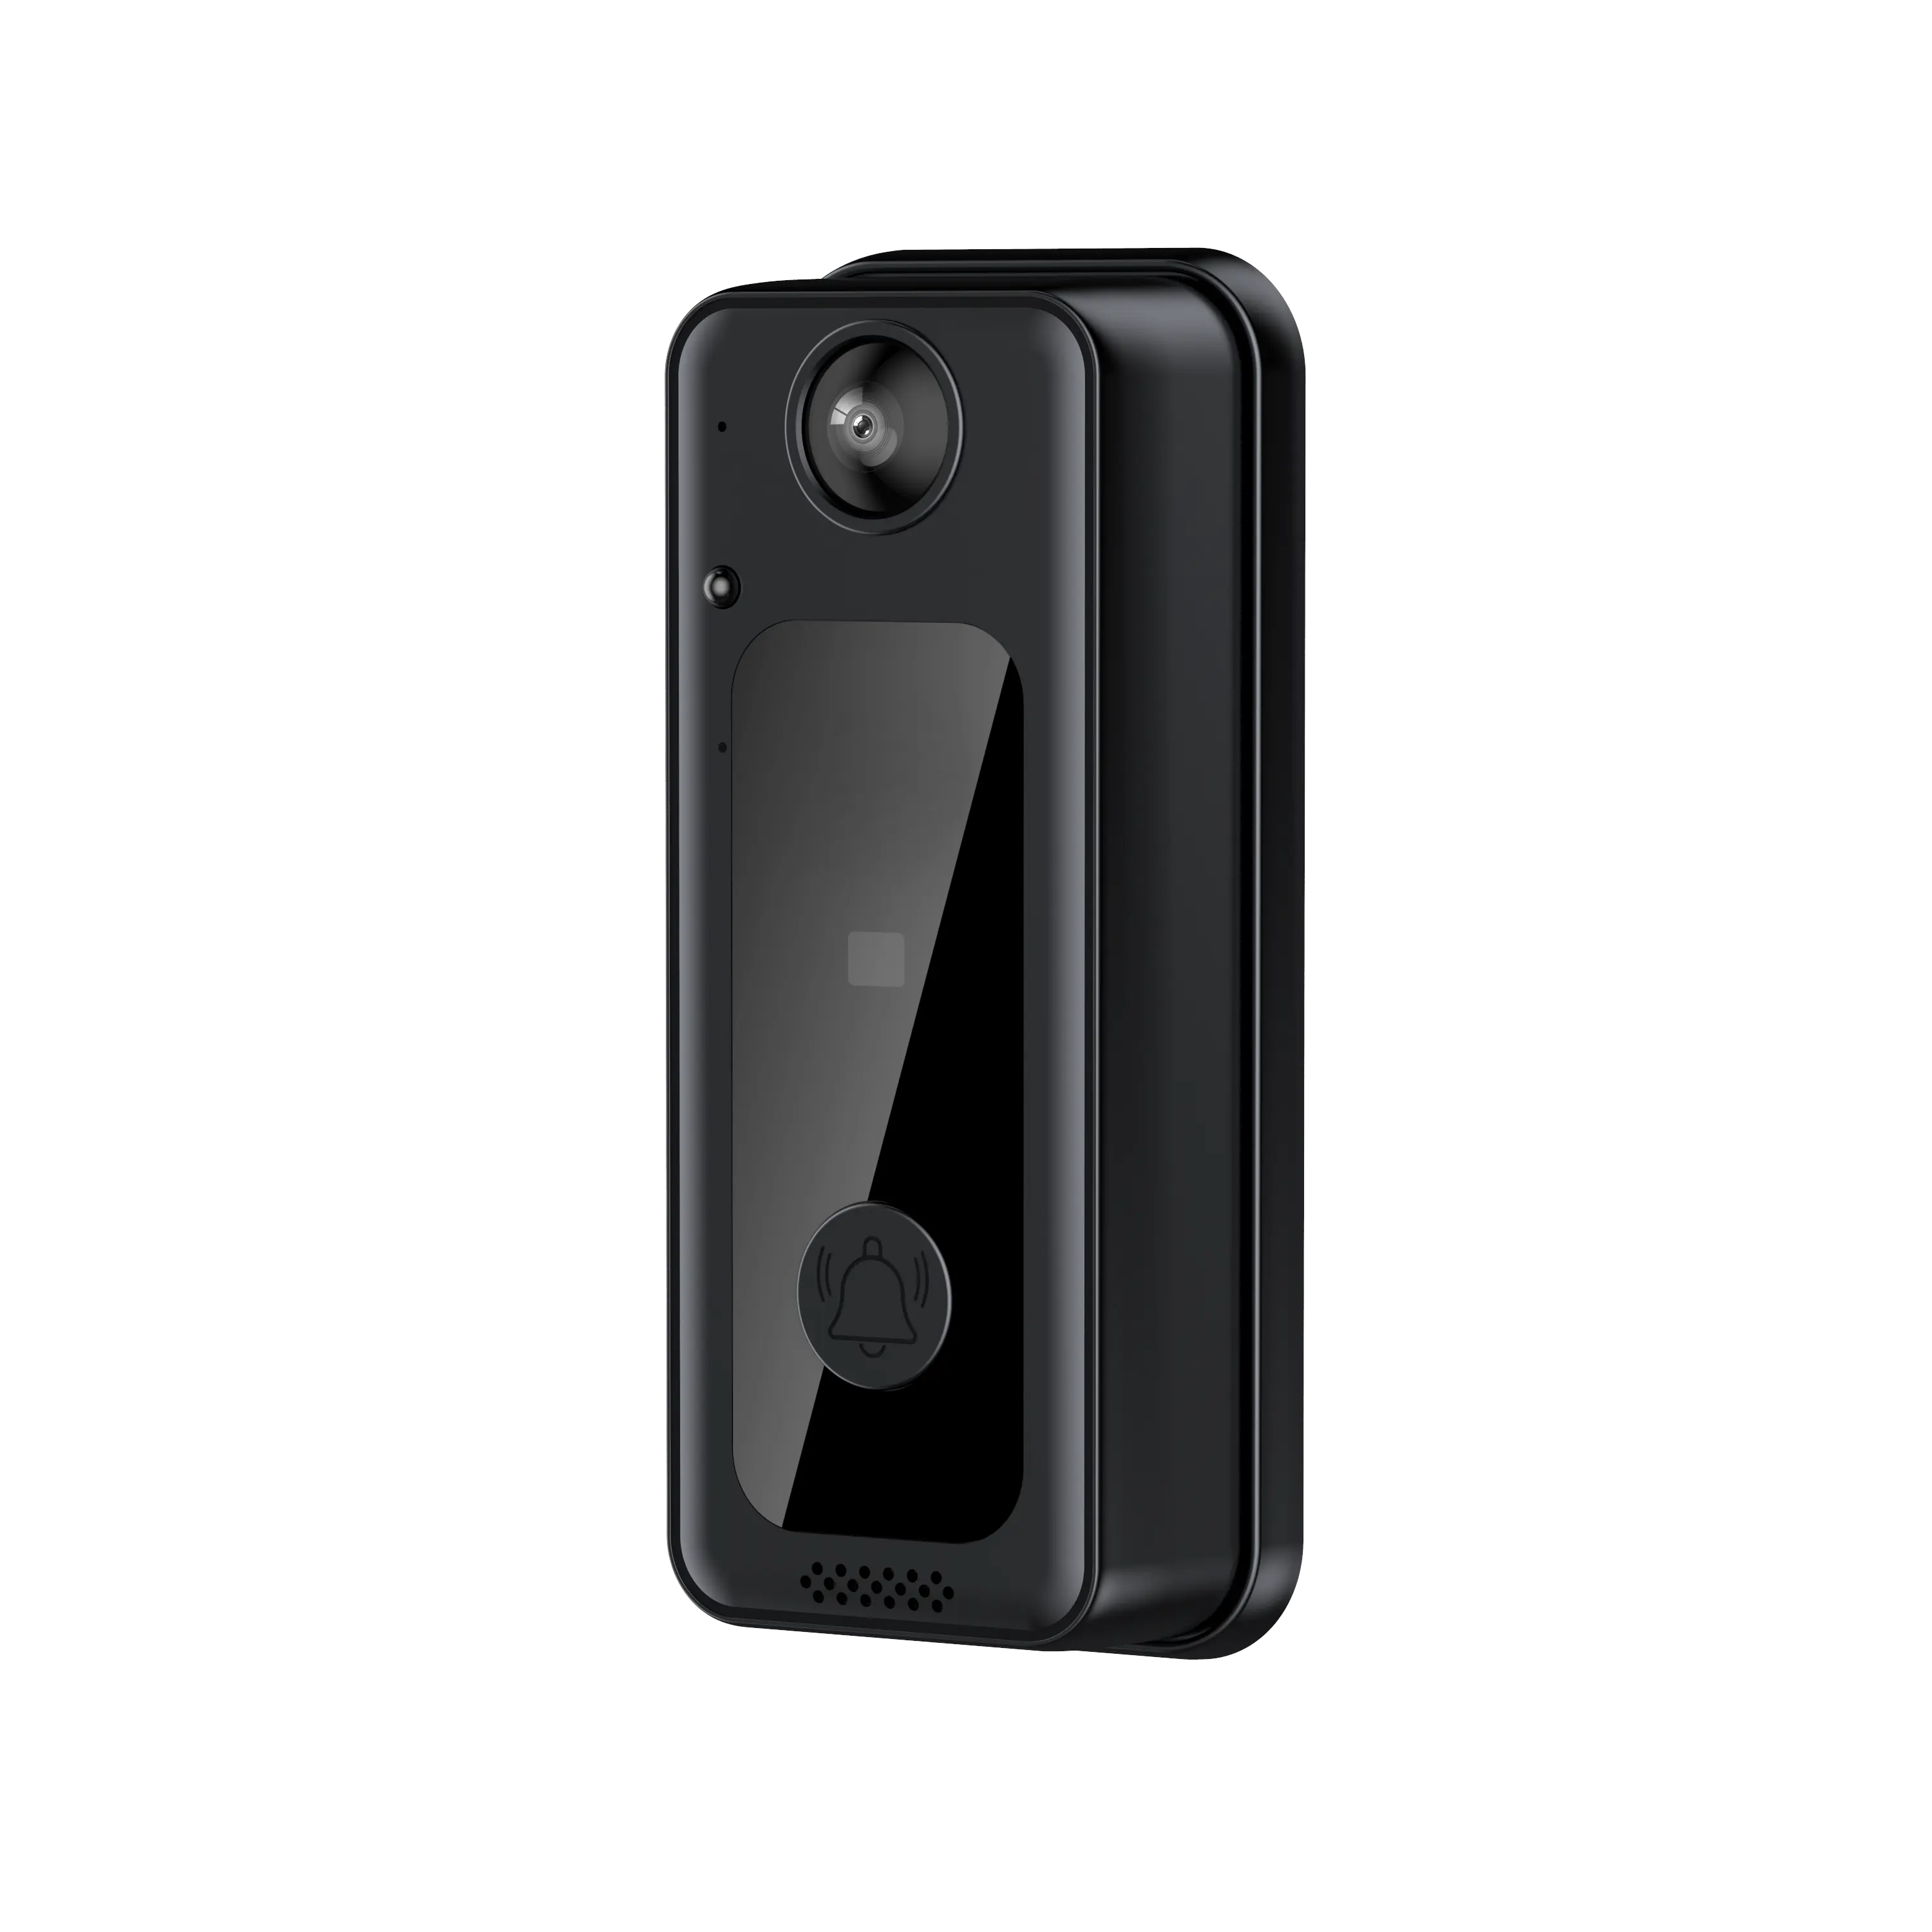 M3 WiFi visual mini doorbell camera HD tuya app camera with chime two-way audio night vision wireless Video Doorbell